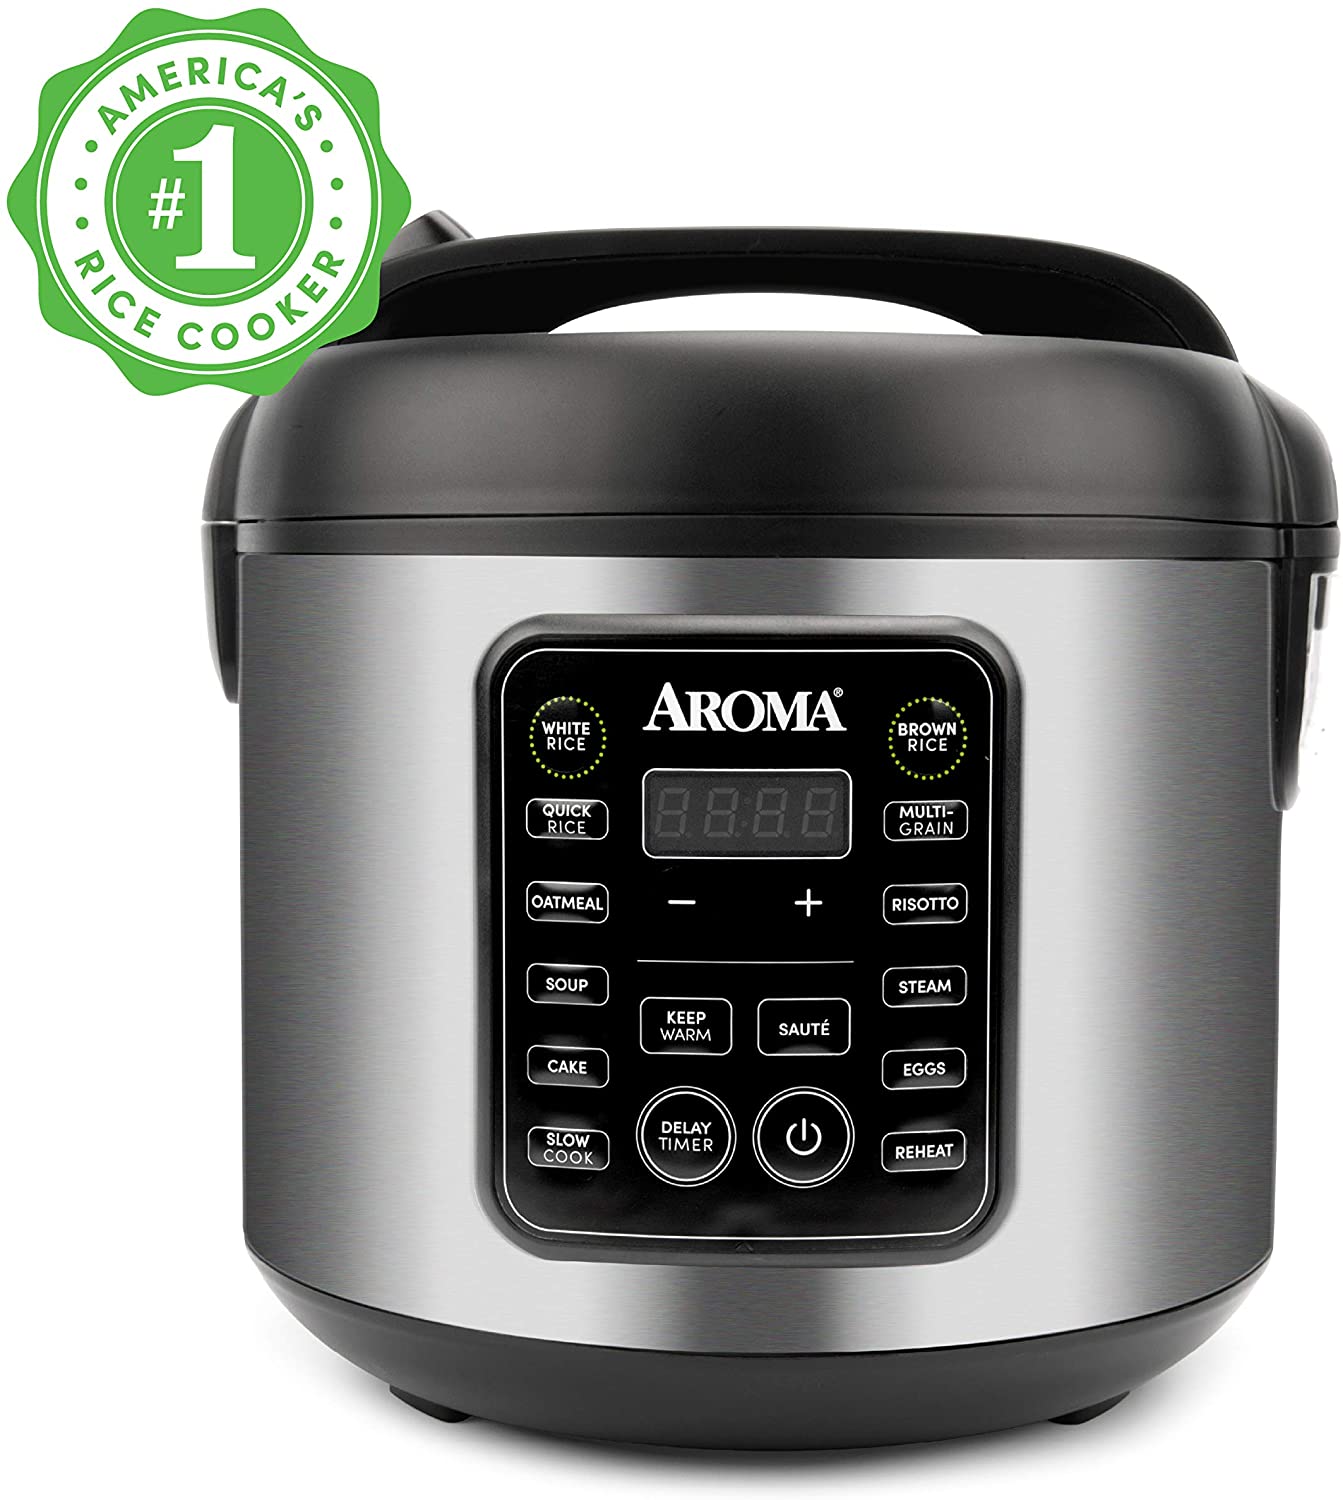 Photo 1 of Aroma Housewares ARC-994SB 2O2O model Rice & Grain Cooker Slow Cook